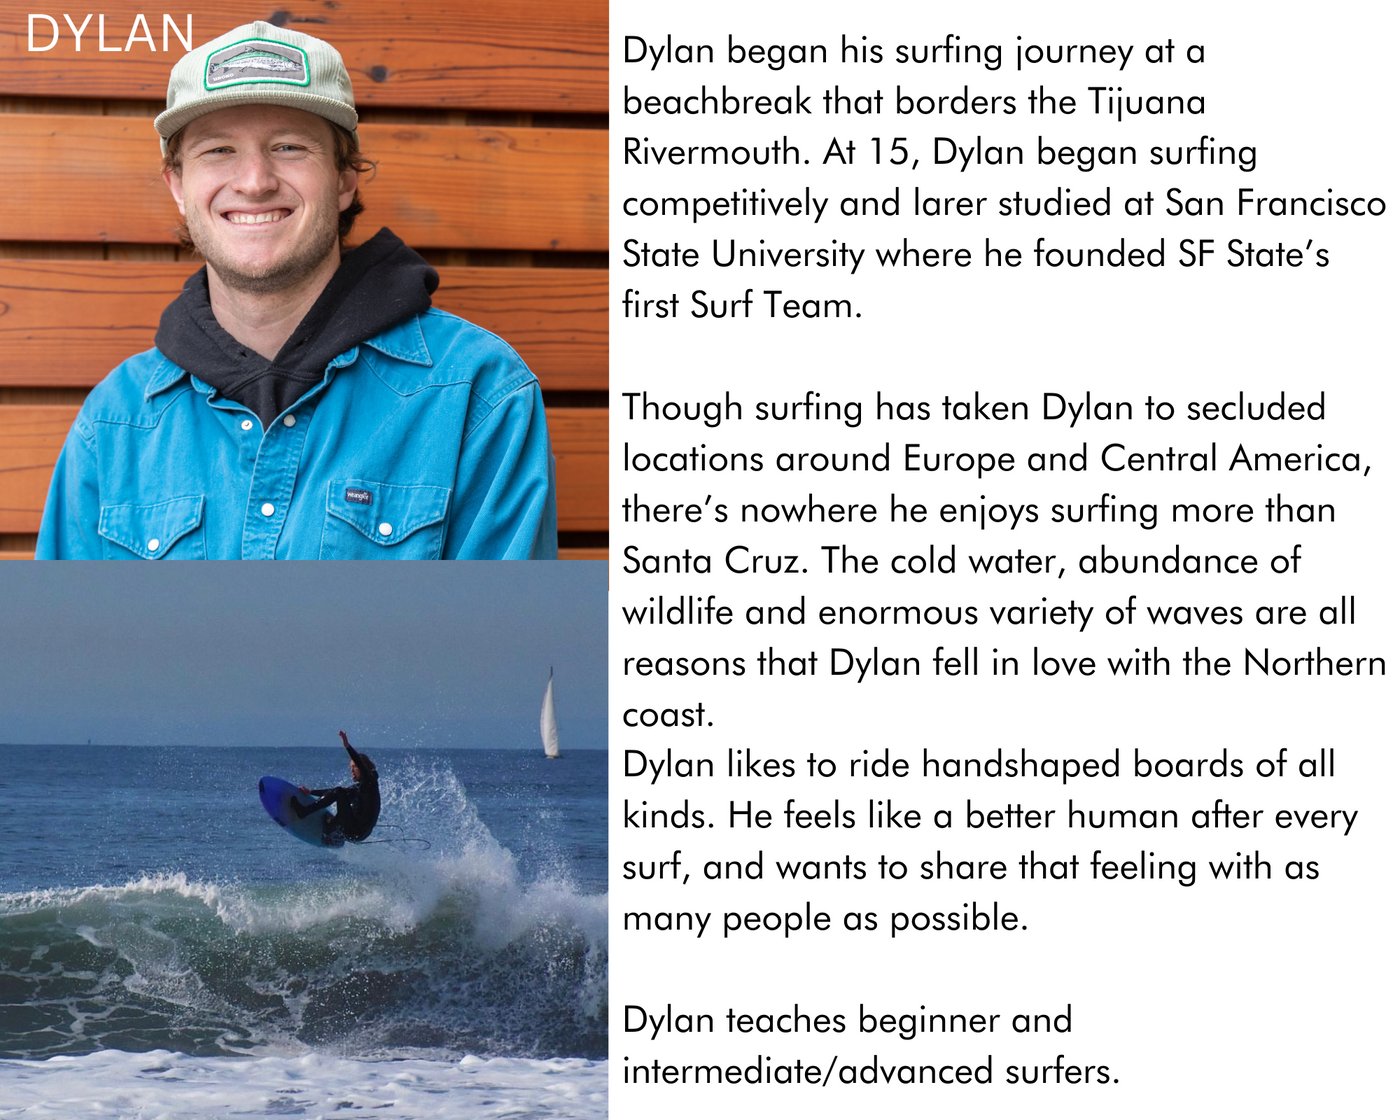 Beginner Surf Lesson - Santa Cruz